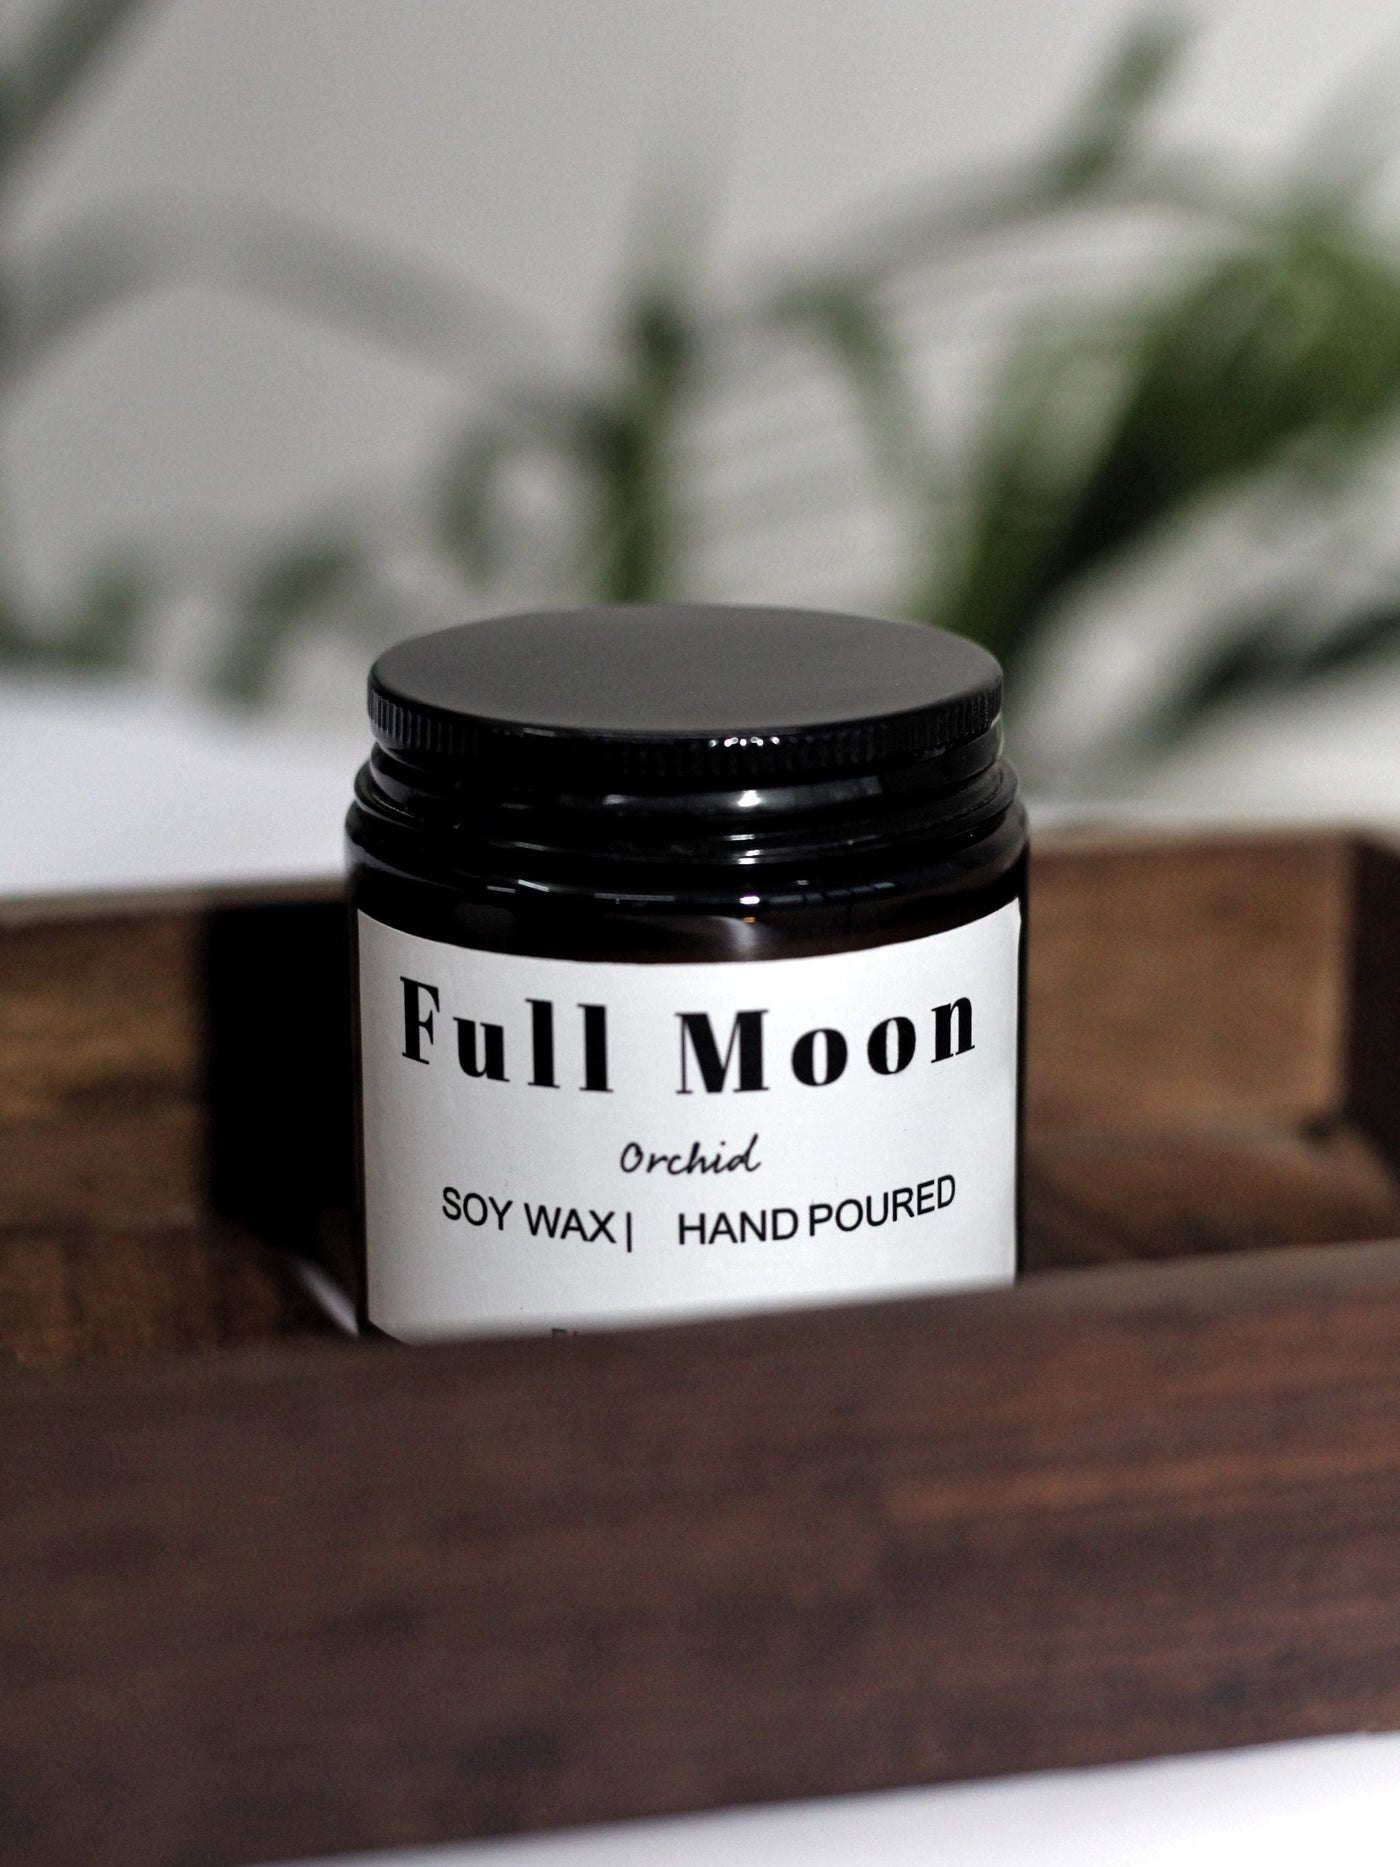 Full Moon Jar Candle